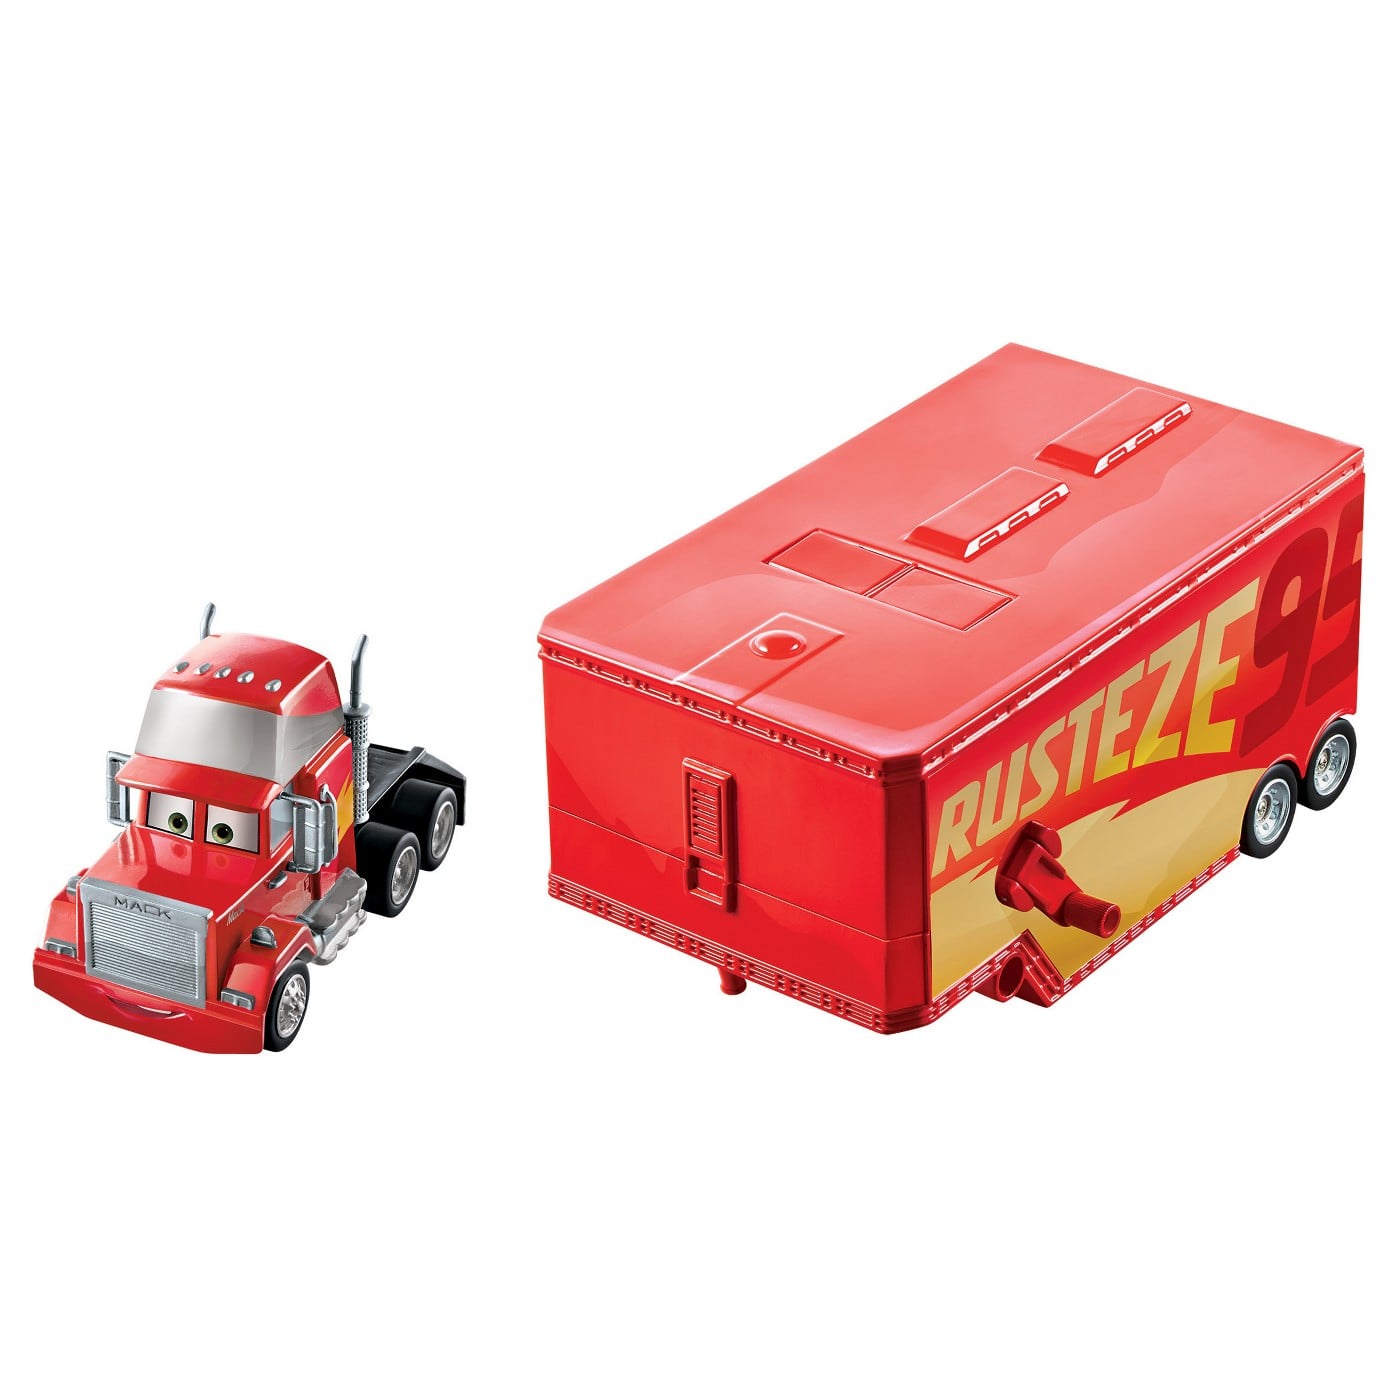 Bo-Toys Construction Trucks Building Blocks Race Track Set 2 Metal Cars with 